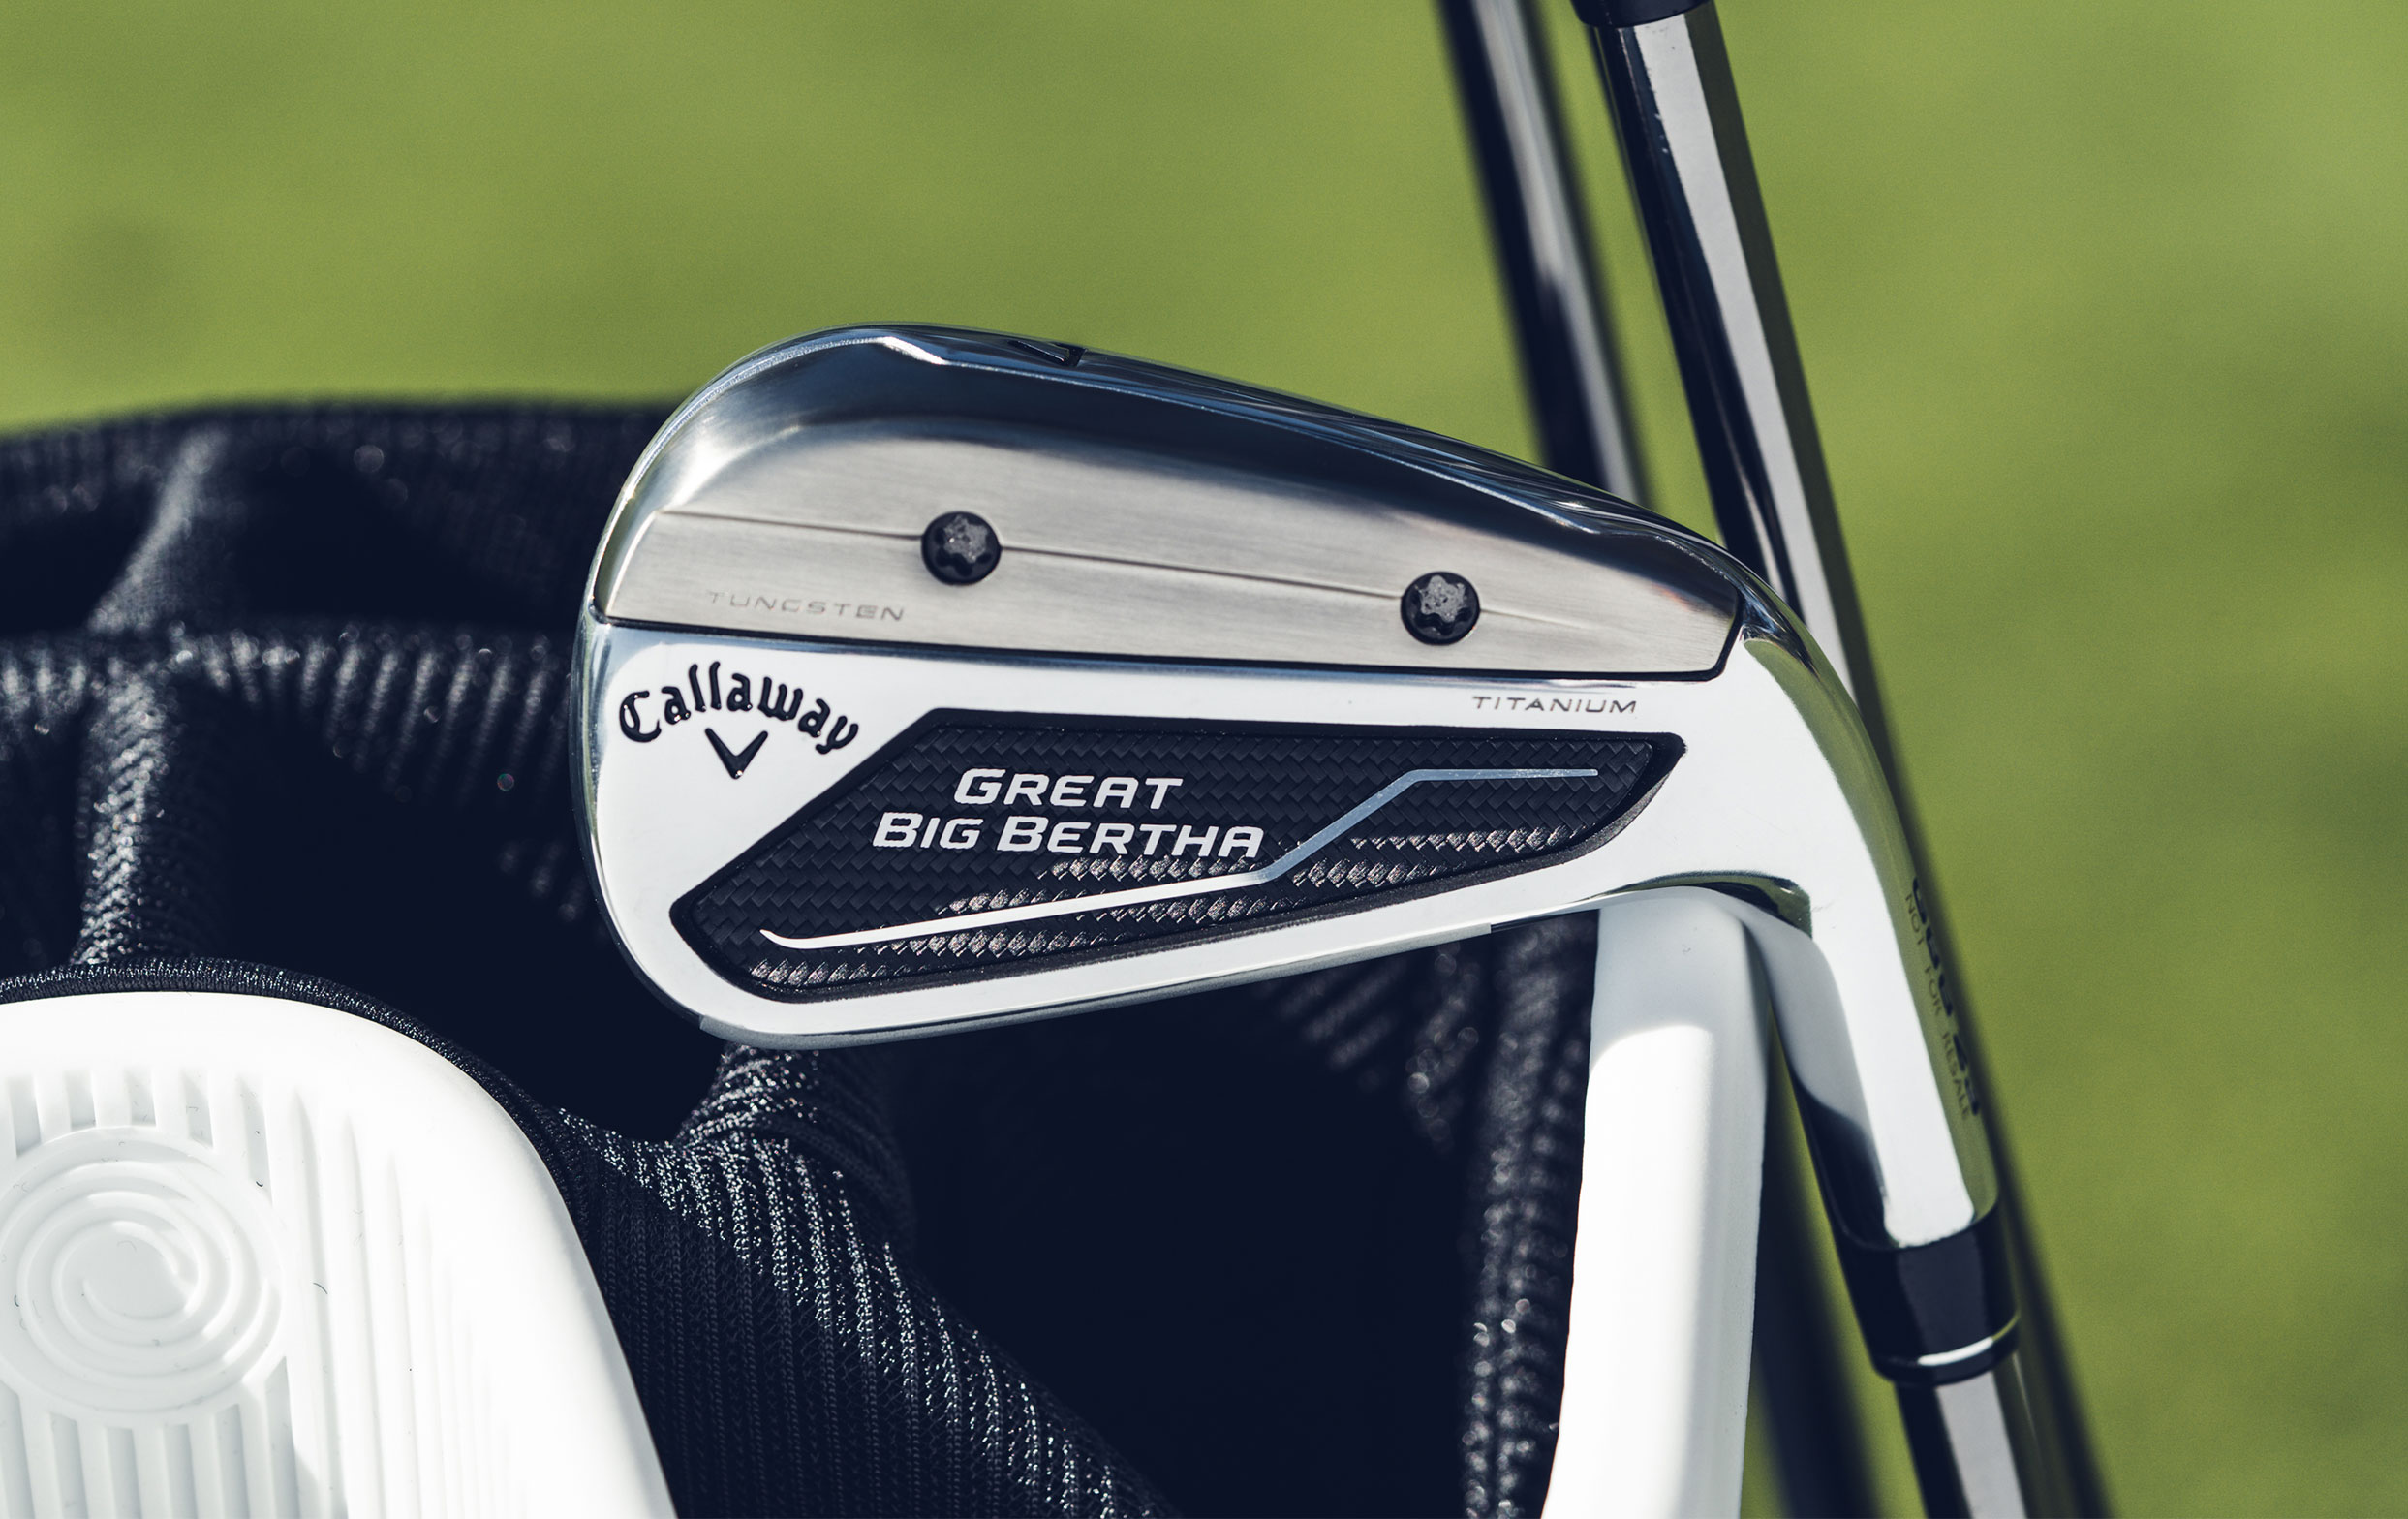 New Callaway Golf Great Big Bertha Irons (7 Iron Set) Graphite 2